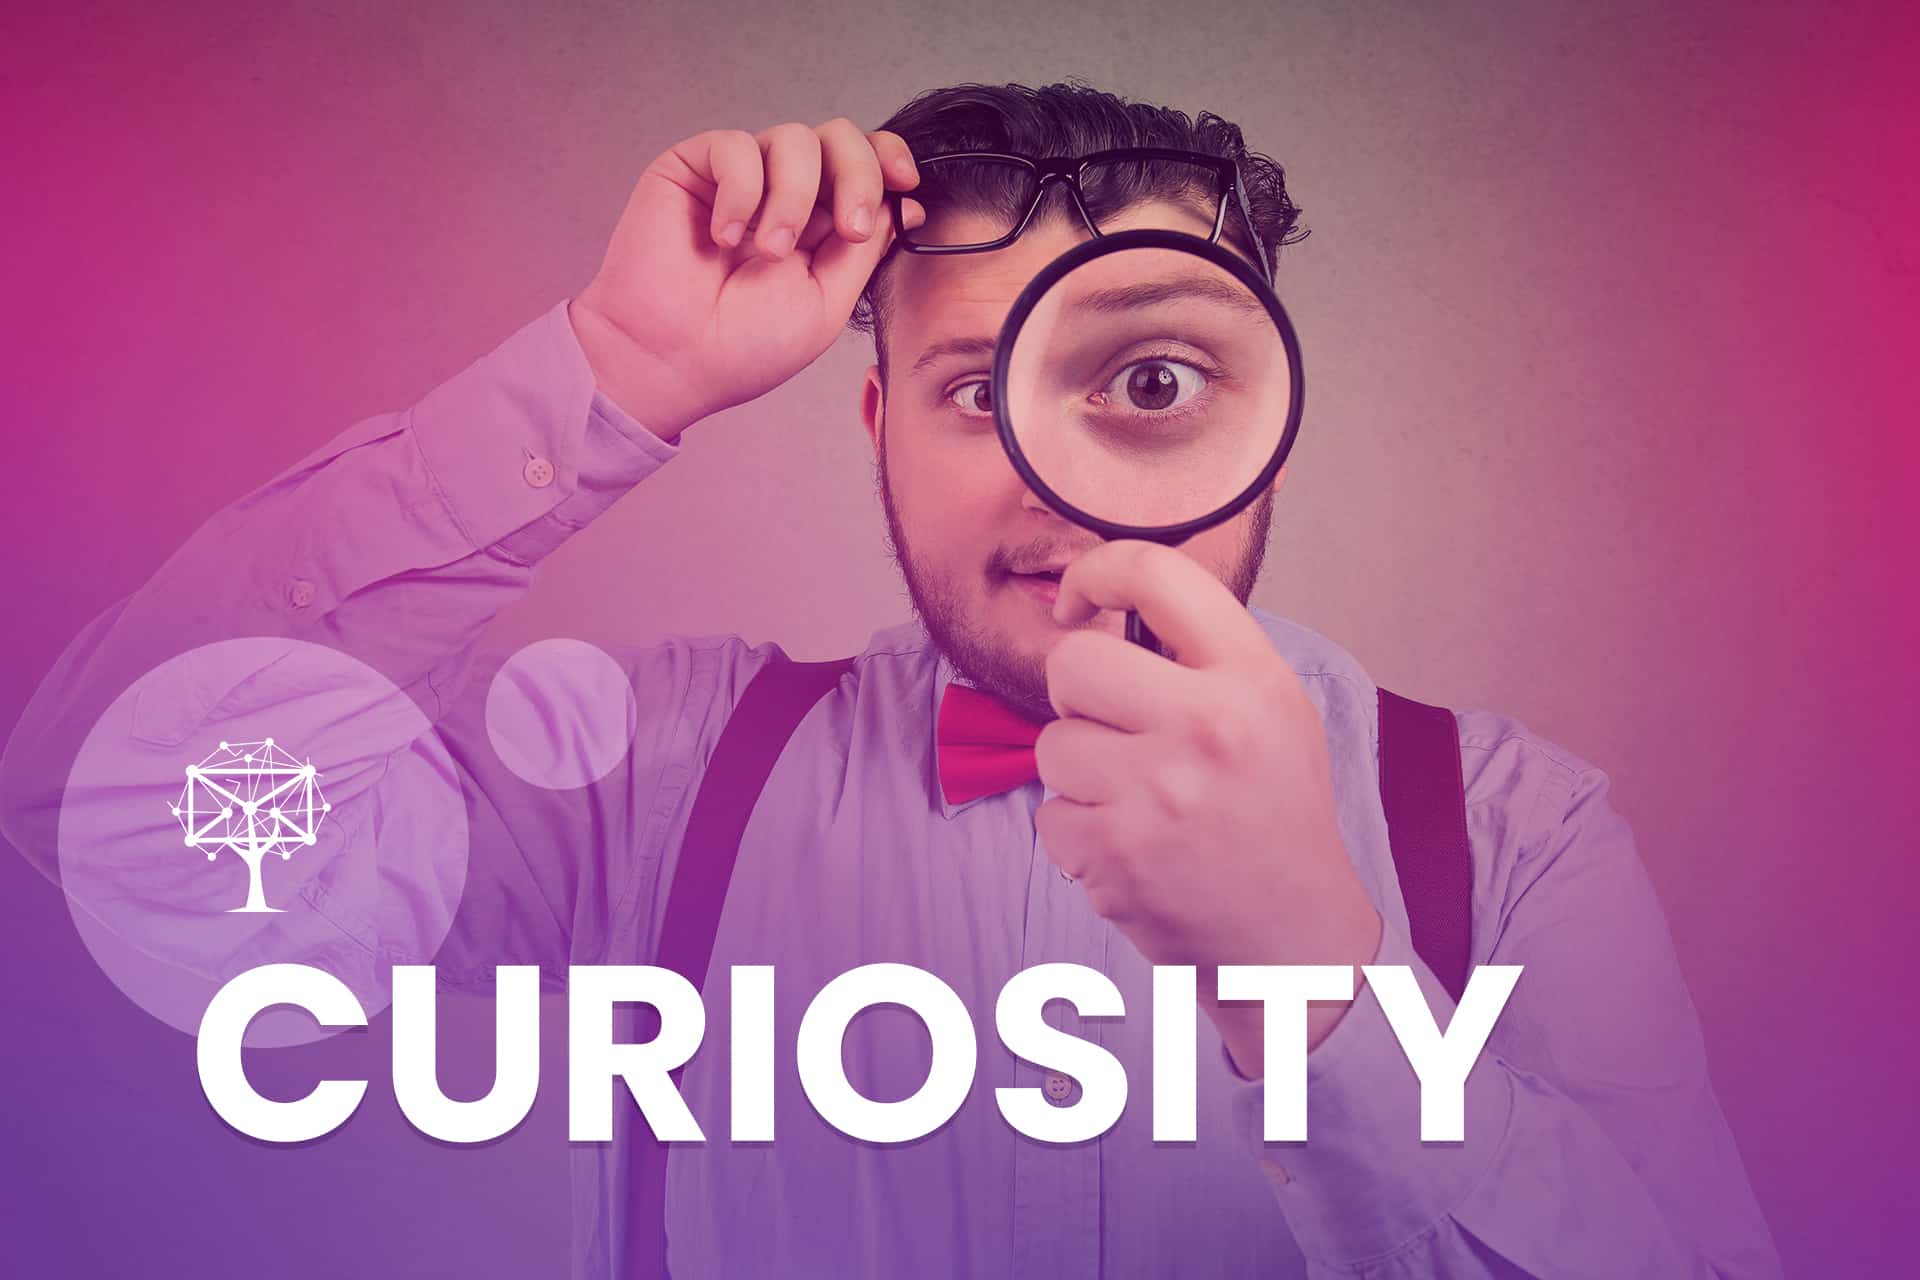 Curiosity is a key customer service skill